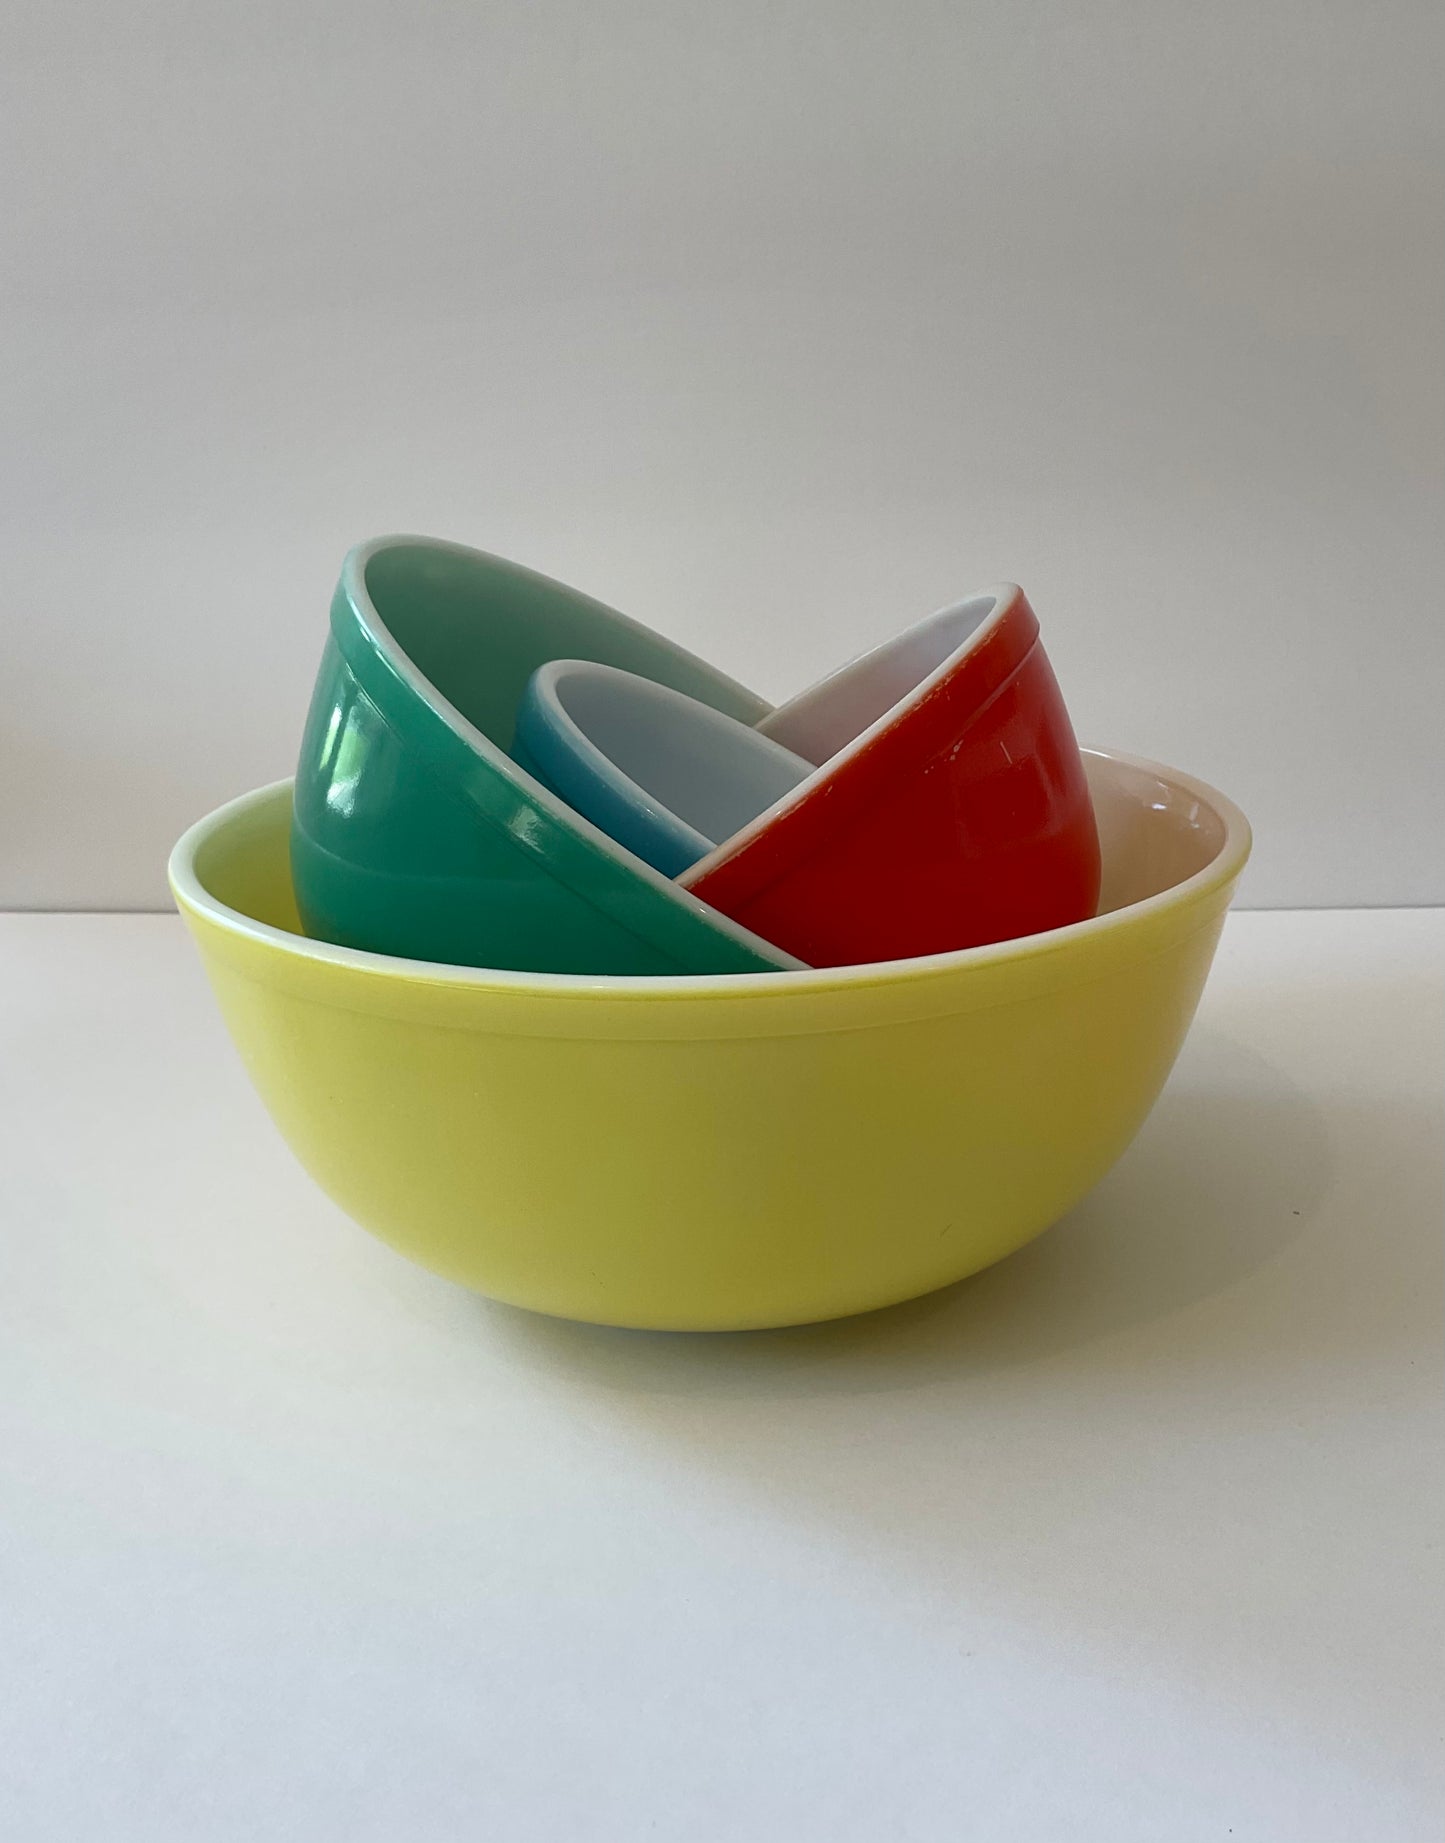 Vintage Pyrex Primary Colors Nesting Bowls